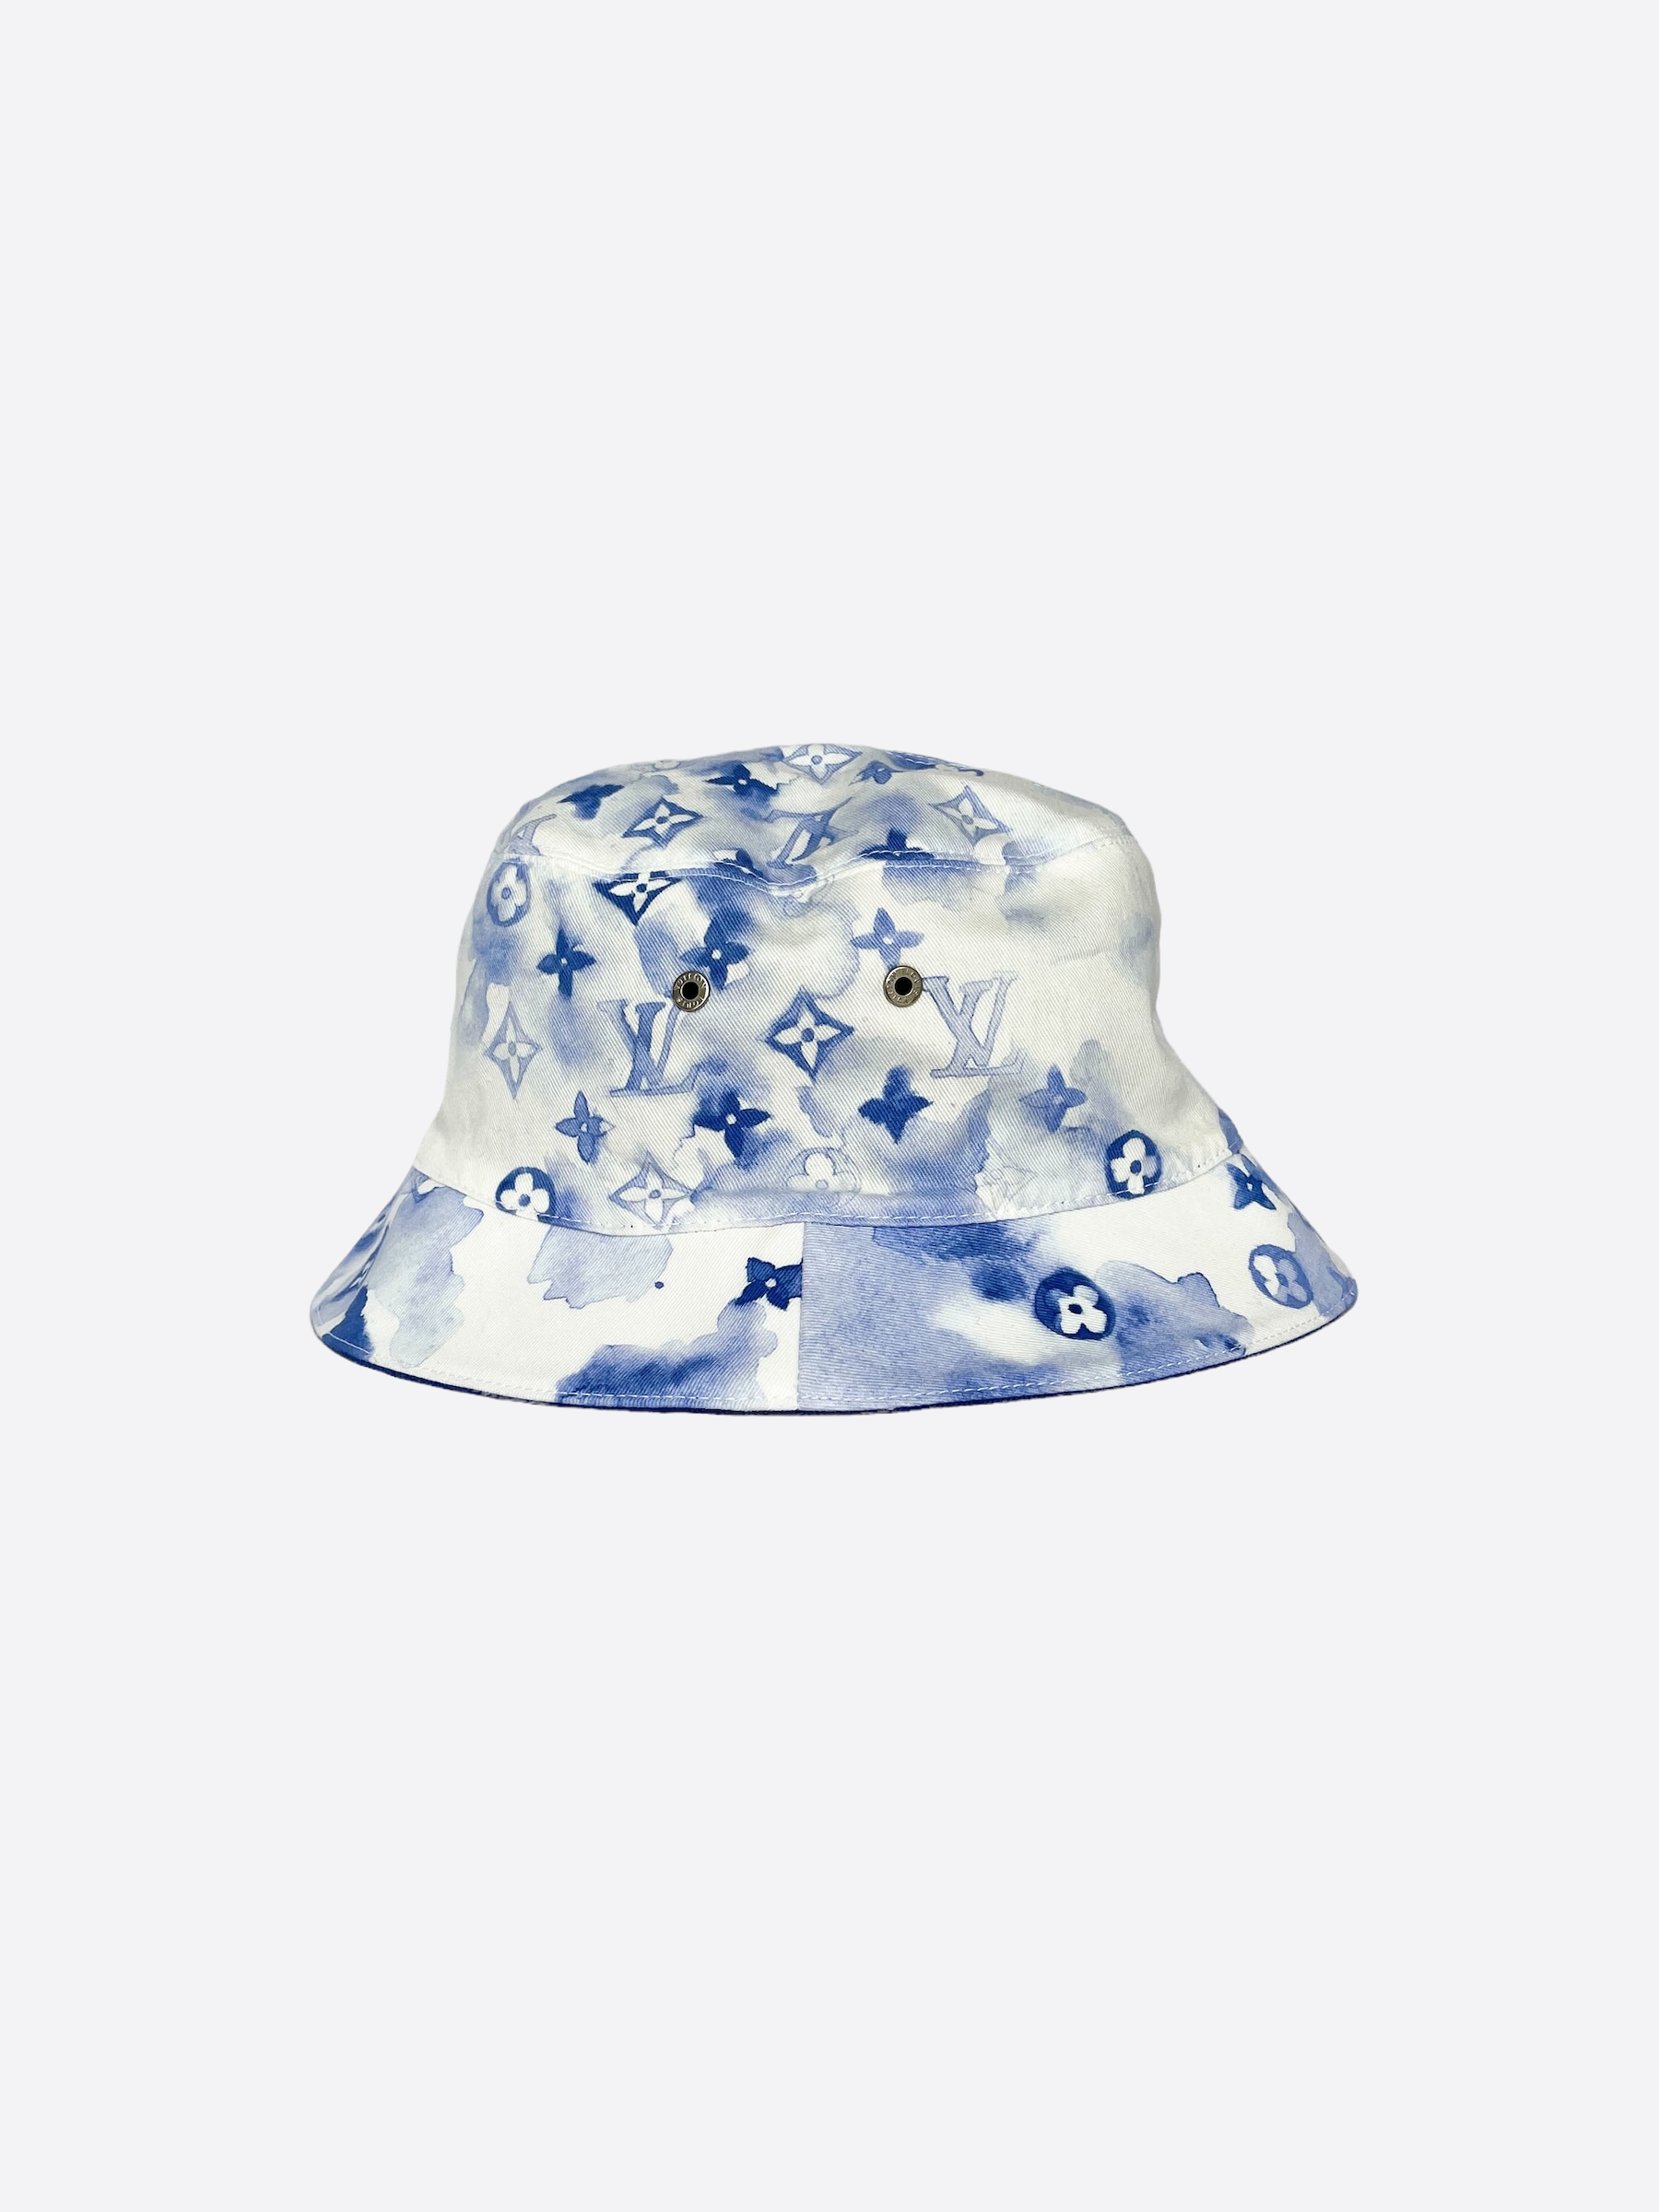 Louis Vuitton Monogram Bucket Hat Size 60